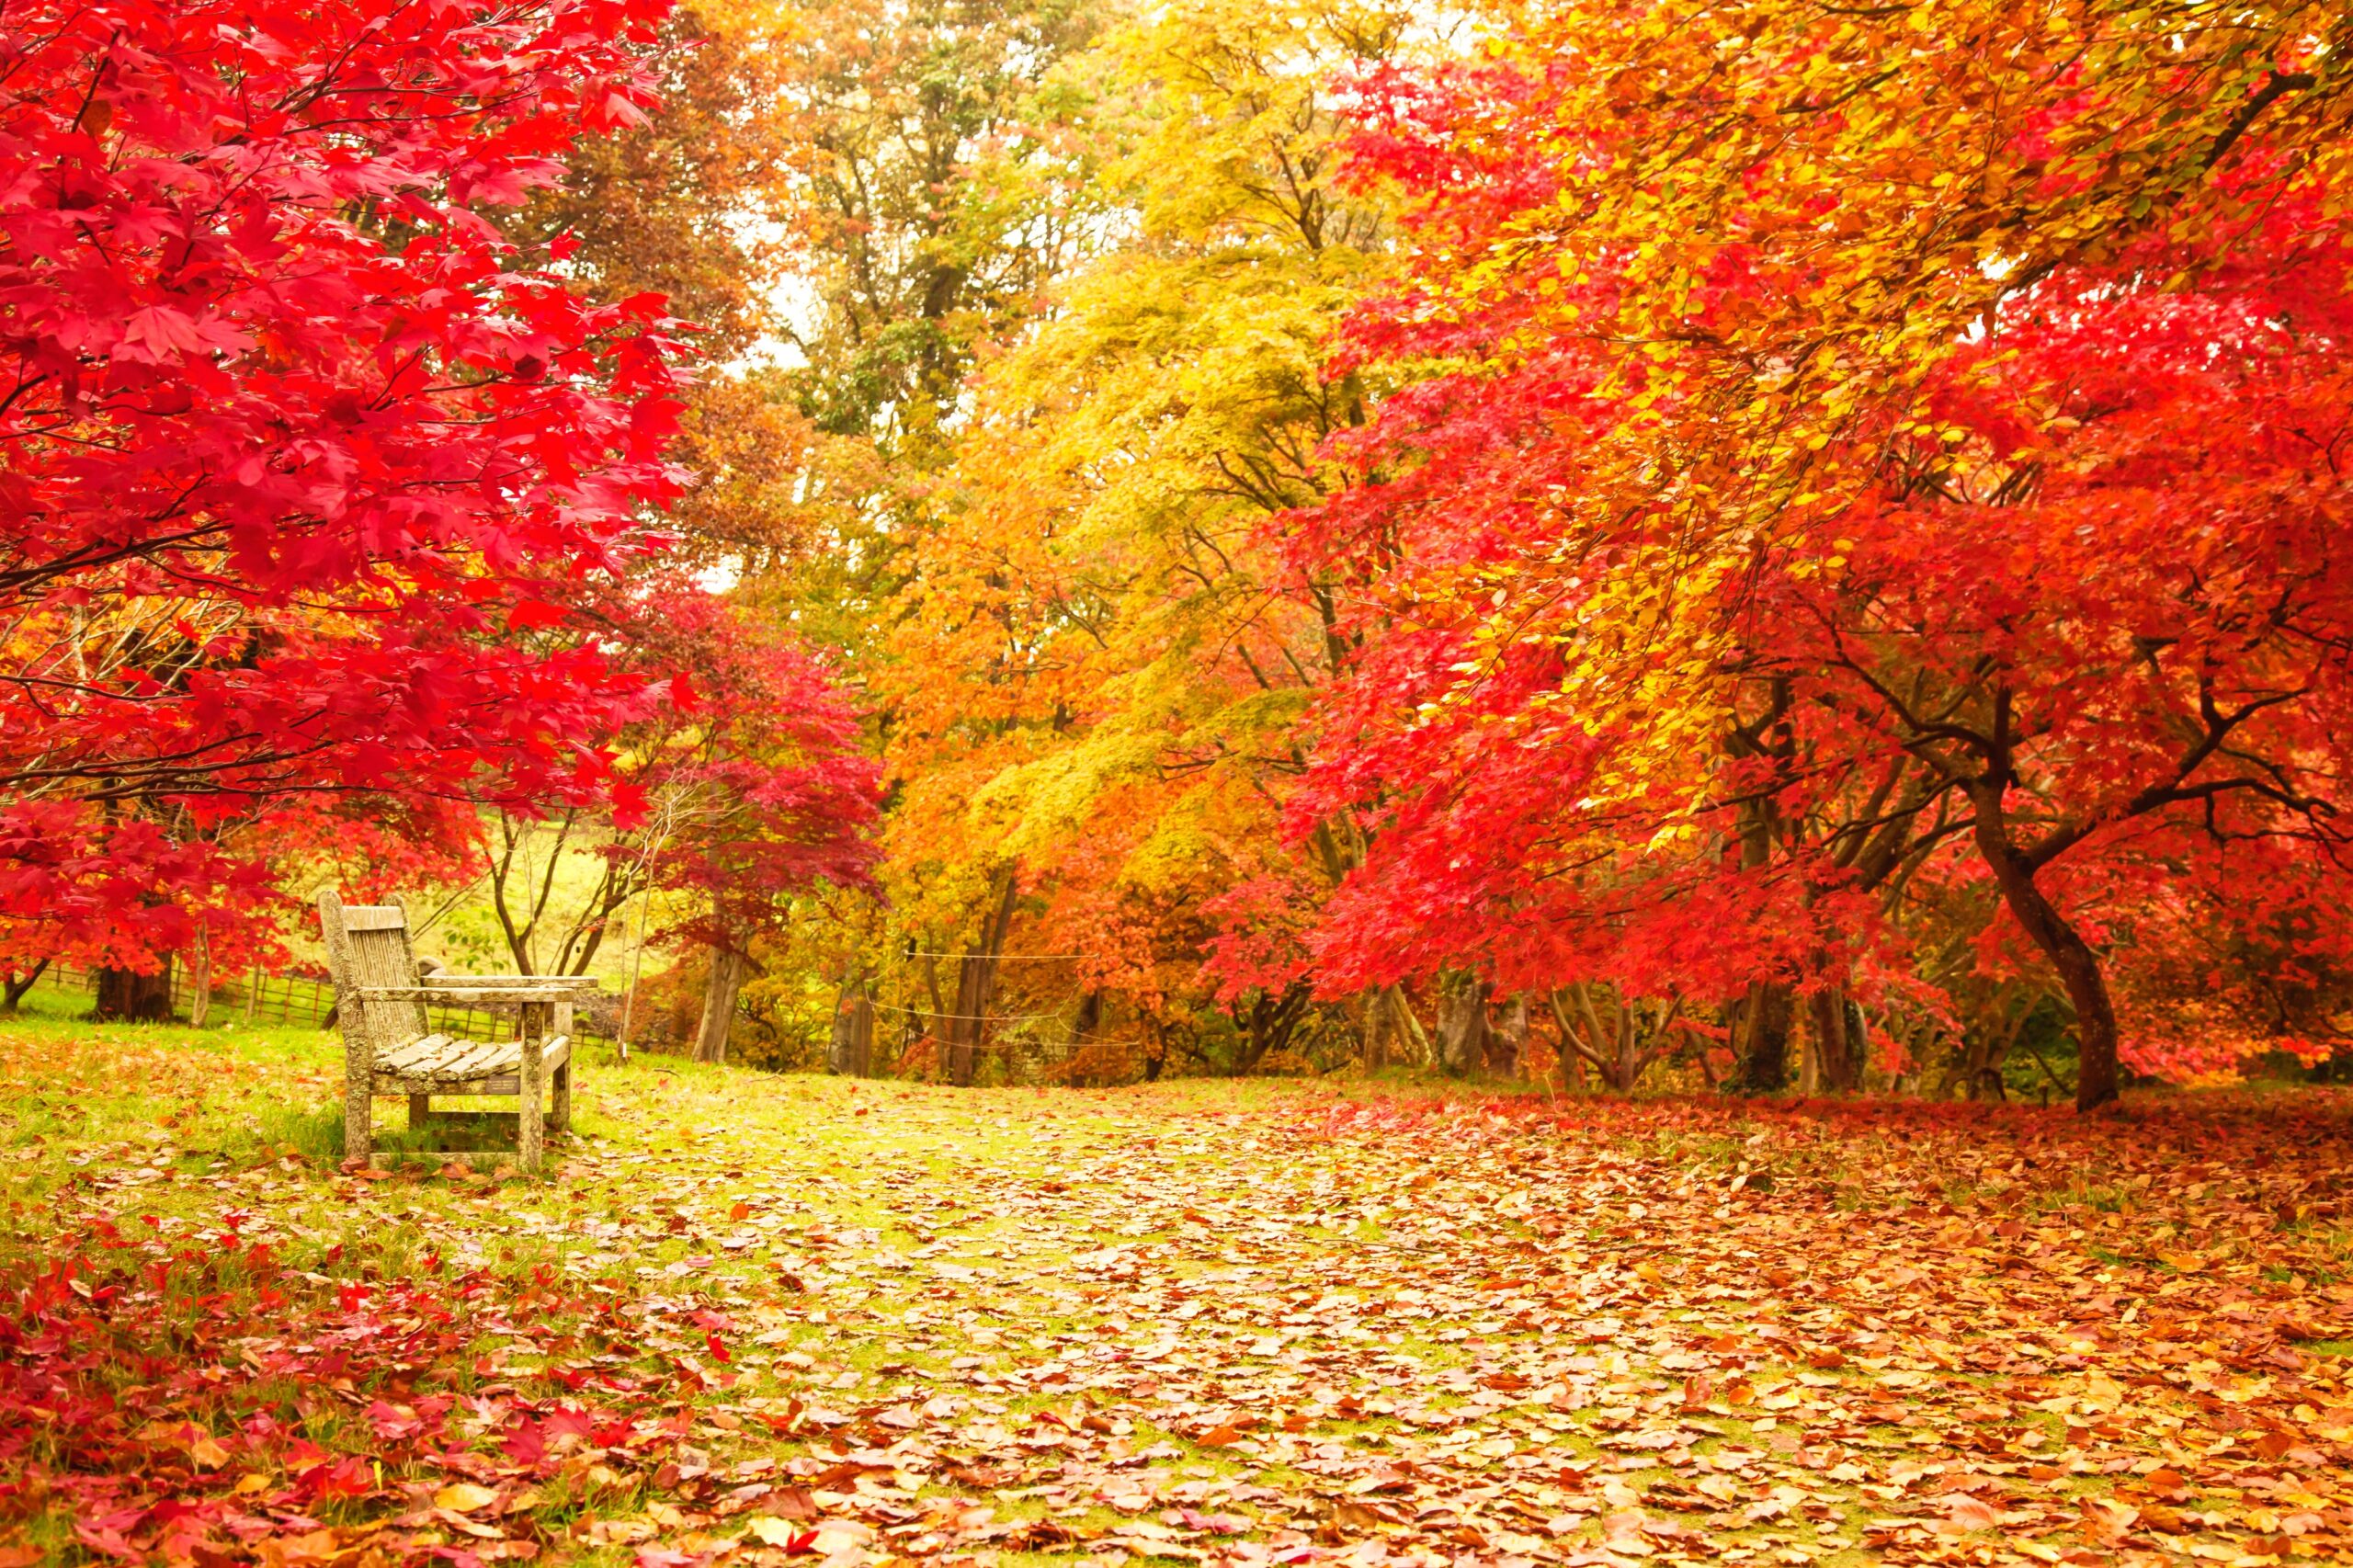 <img src="autumn.jpg" alt="autumn views in England UK"/>